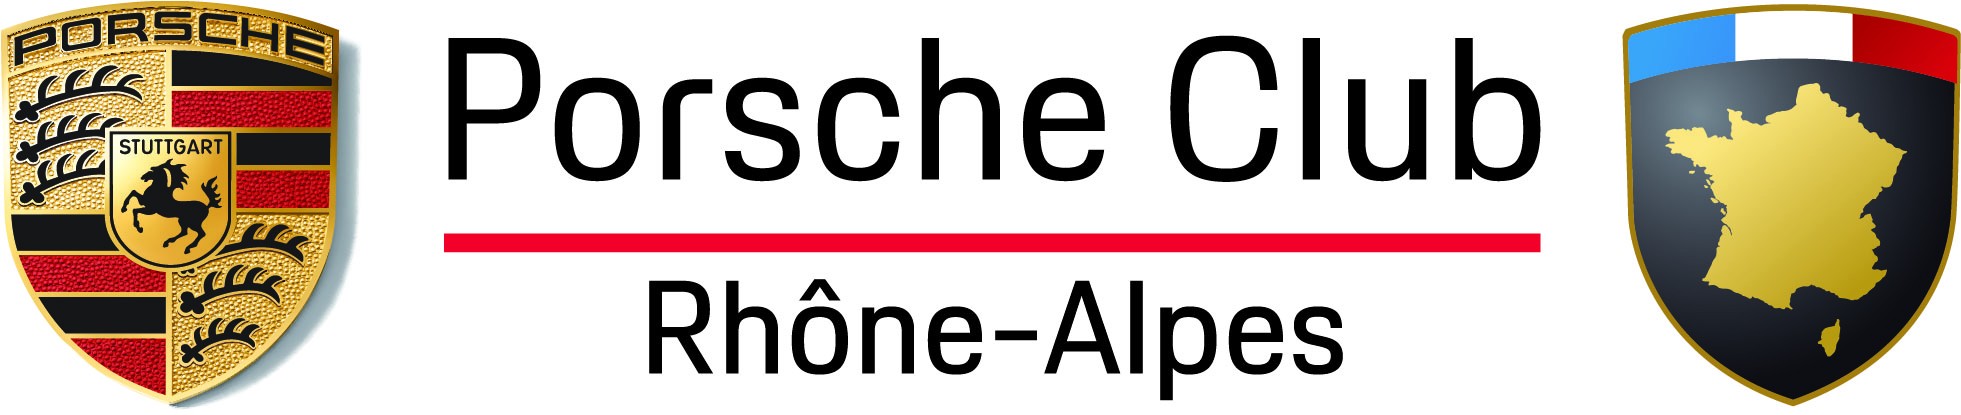 Porsche Club Rhône-Alpes Horizontal